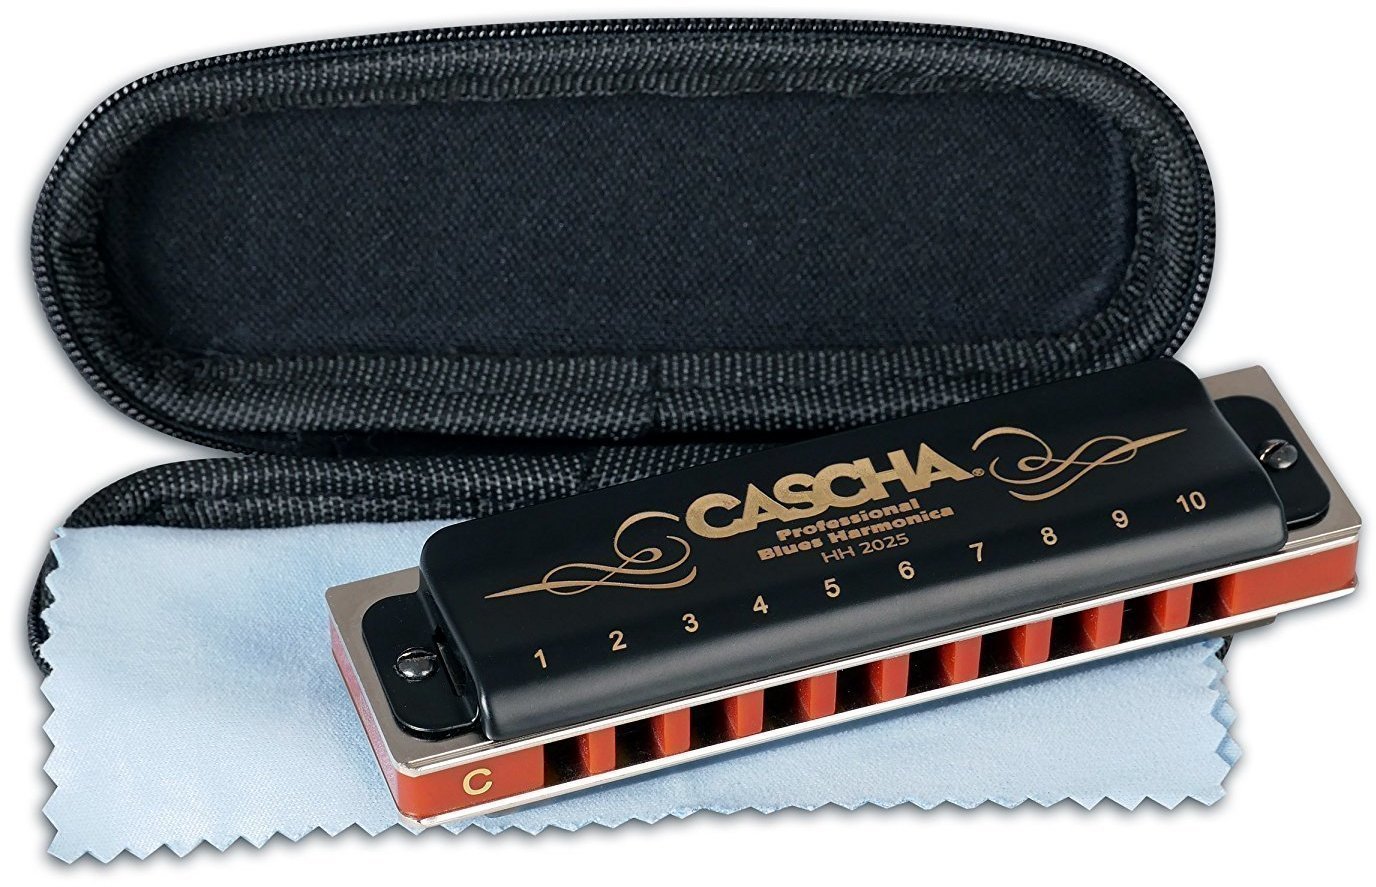 Diatonic harmonica Cascha HH 2025 Professional Blues C